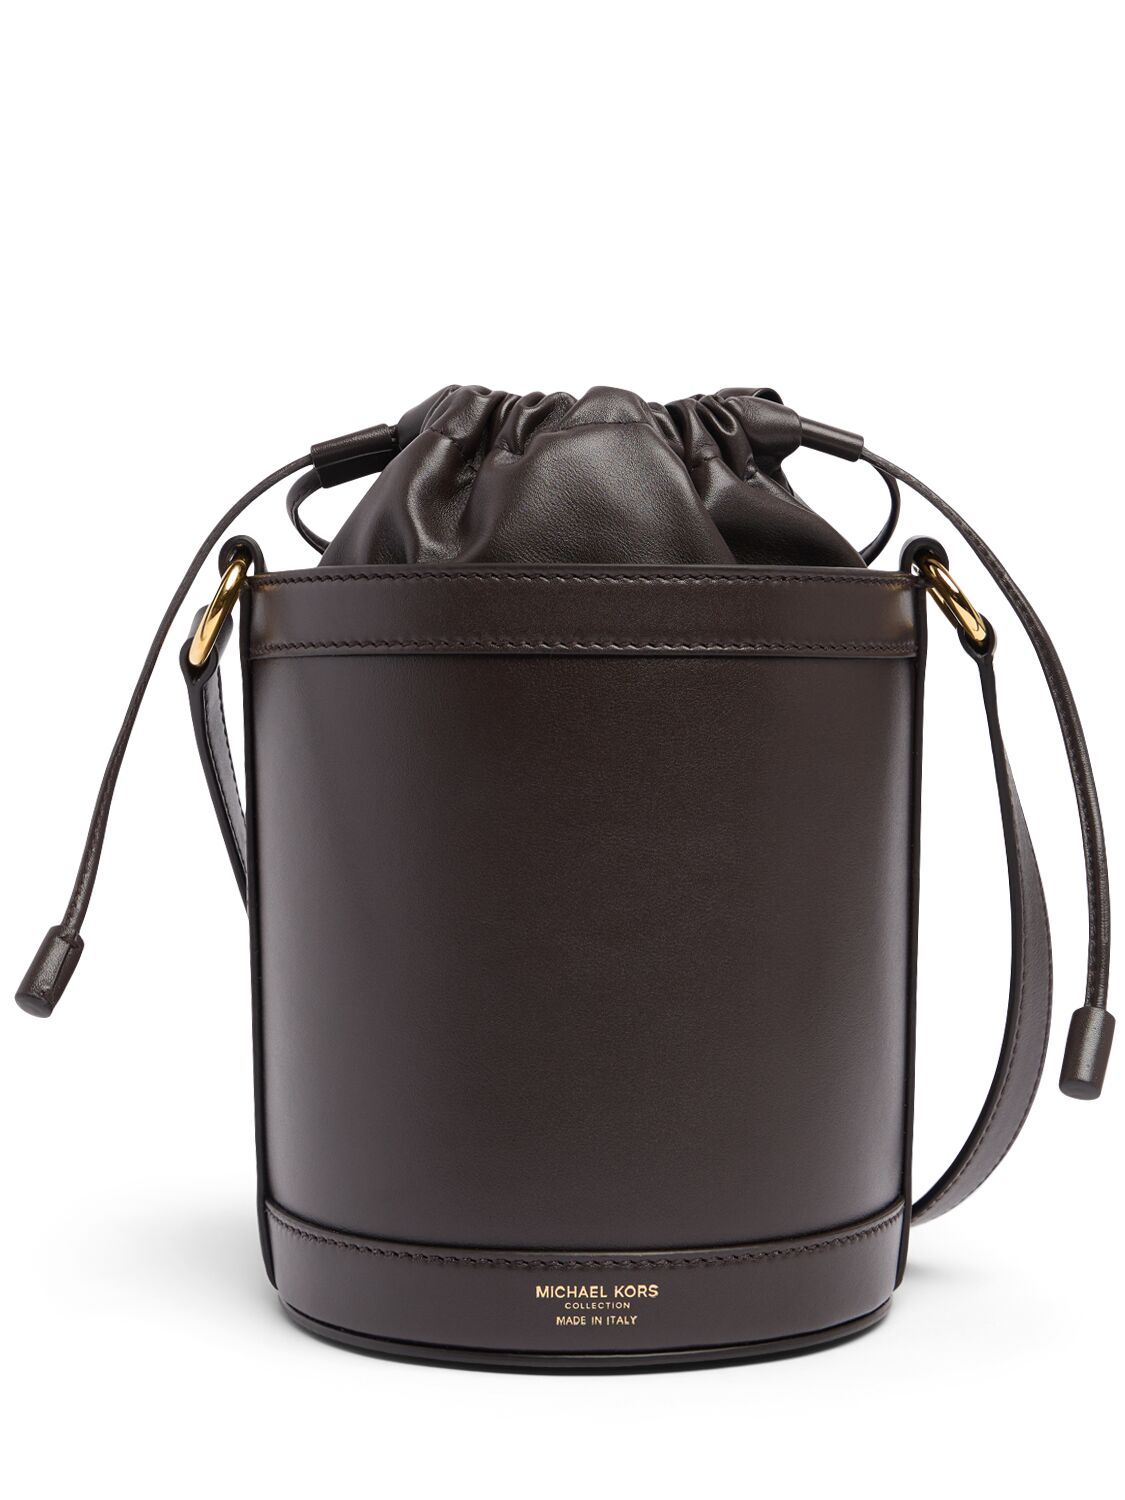 Michael Kors Medium Audrey Leather Bucket Bag In Chocolate